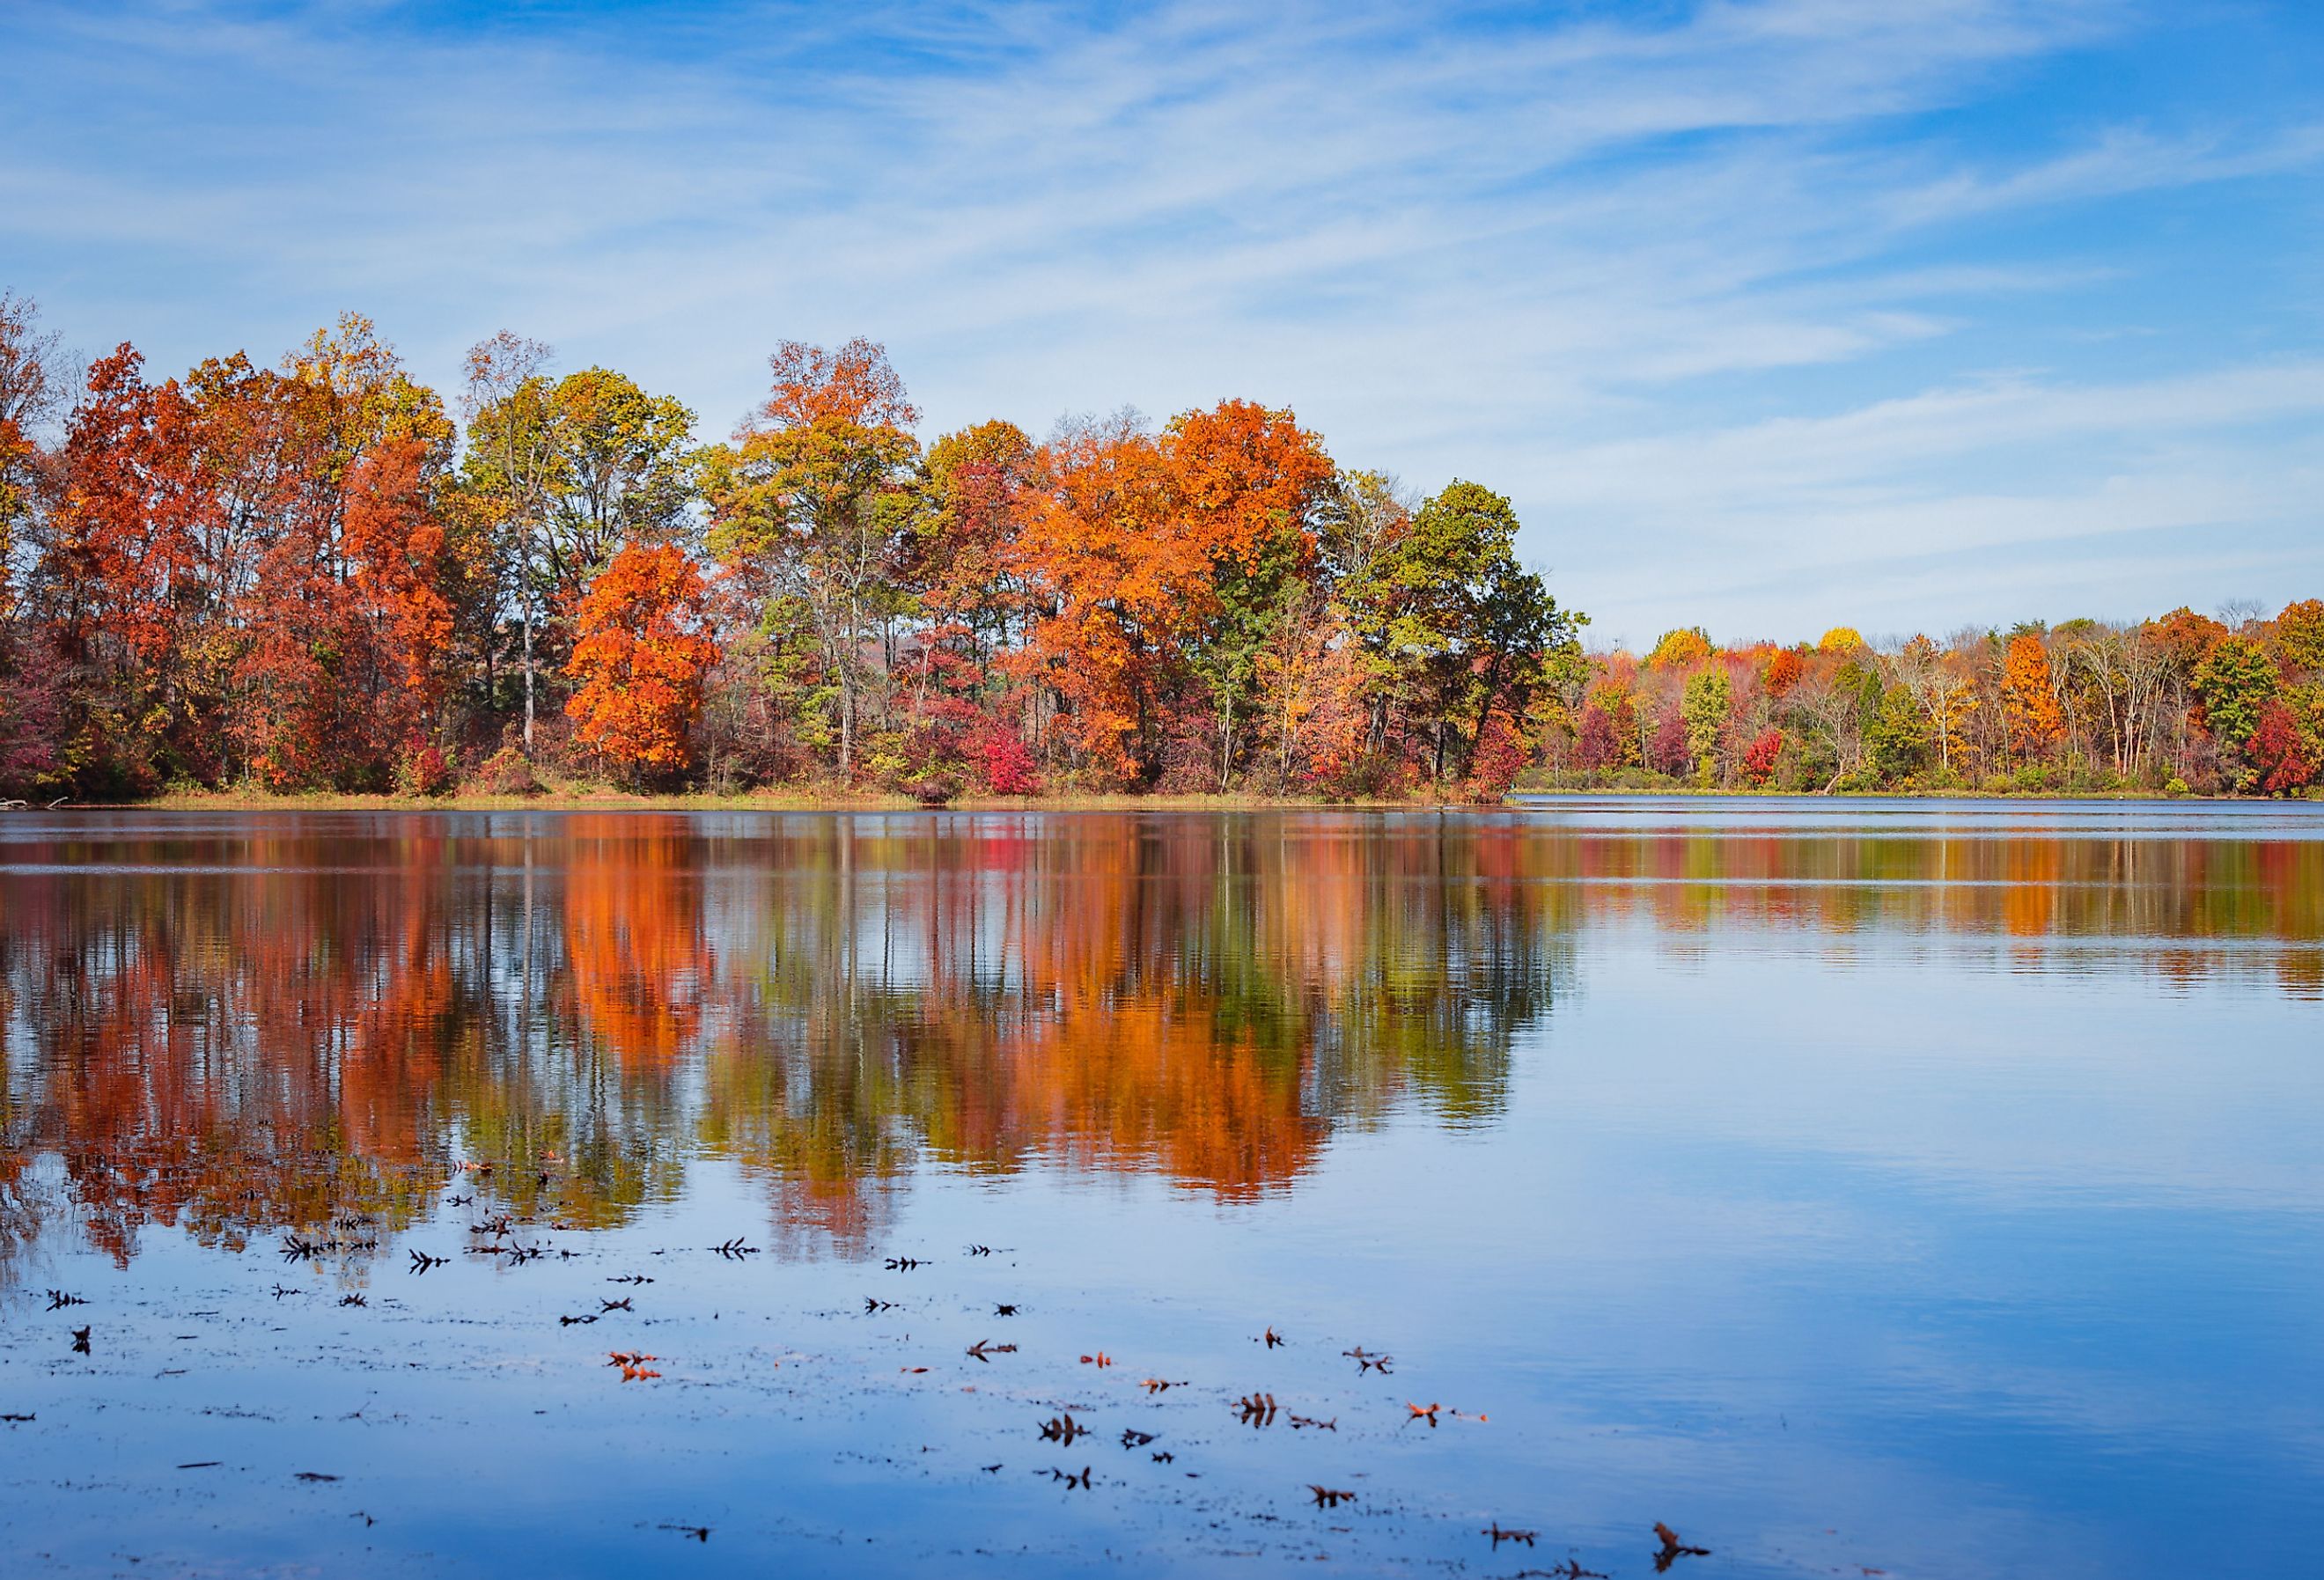 Lake Little Brittle in Warrenton, VA in autumn. 